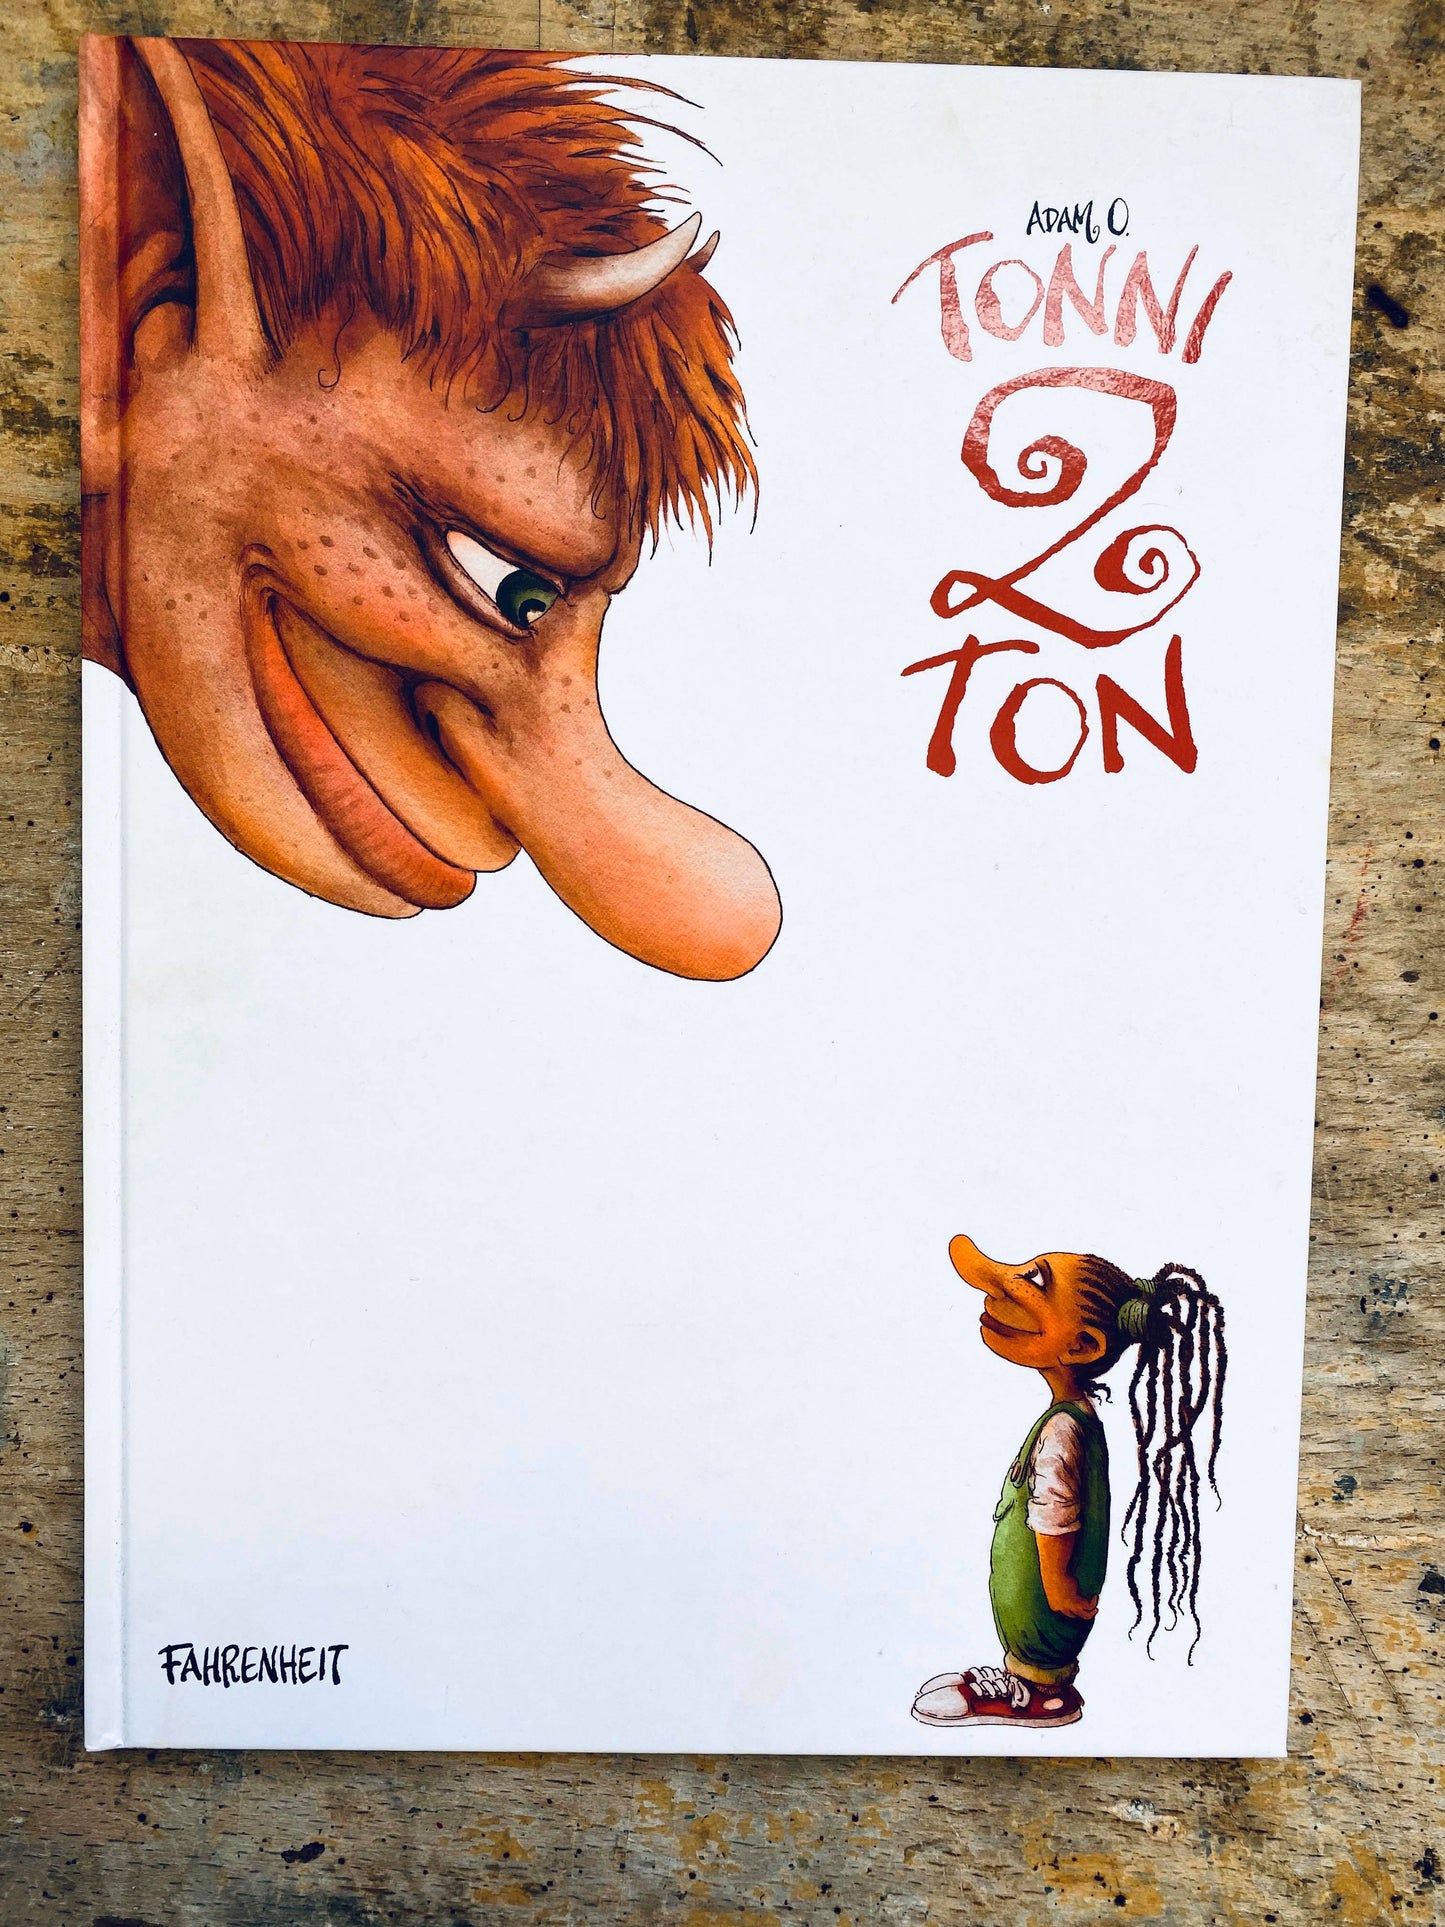 Tonni 2 Ton Seriebok by Adam O